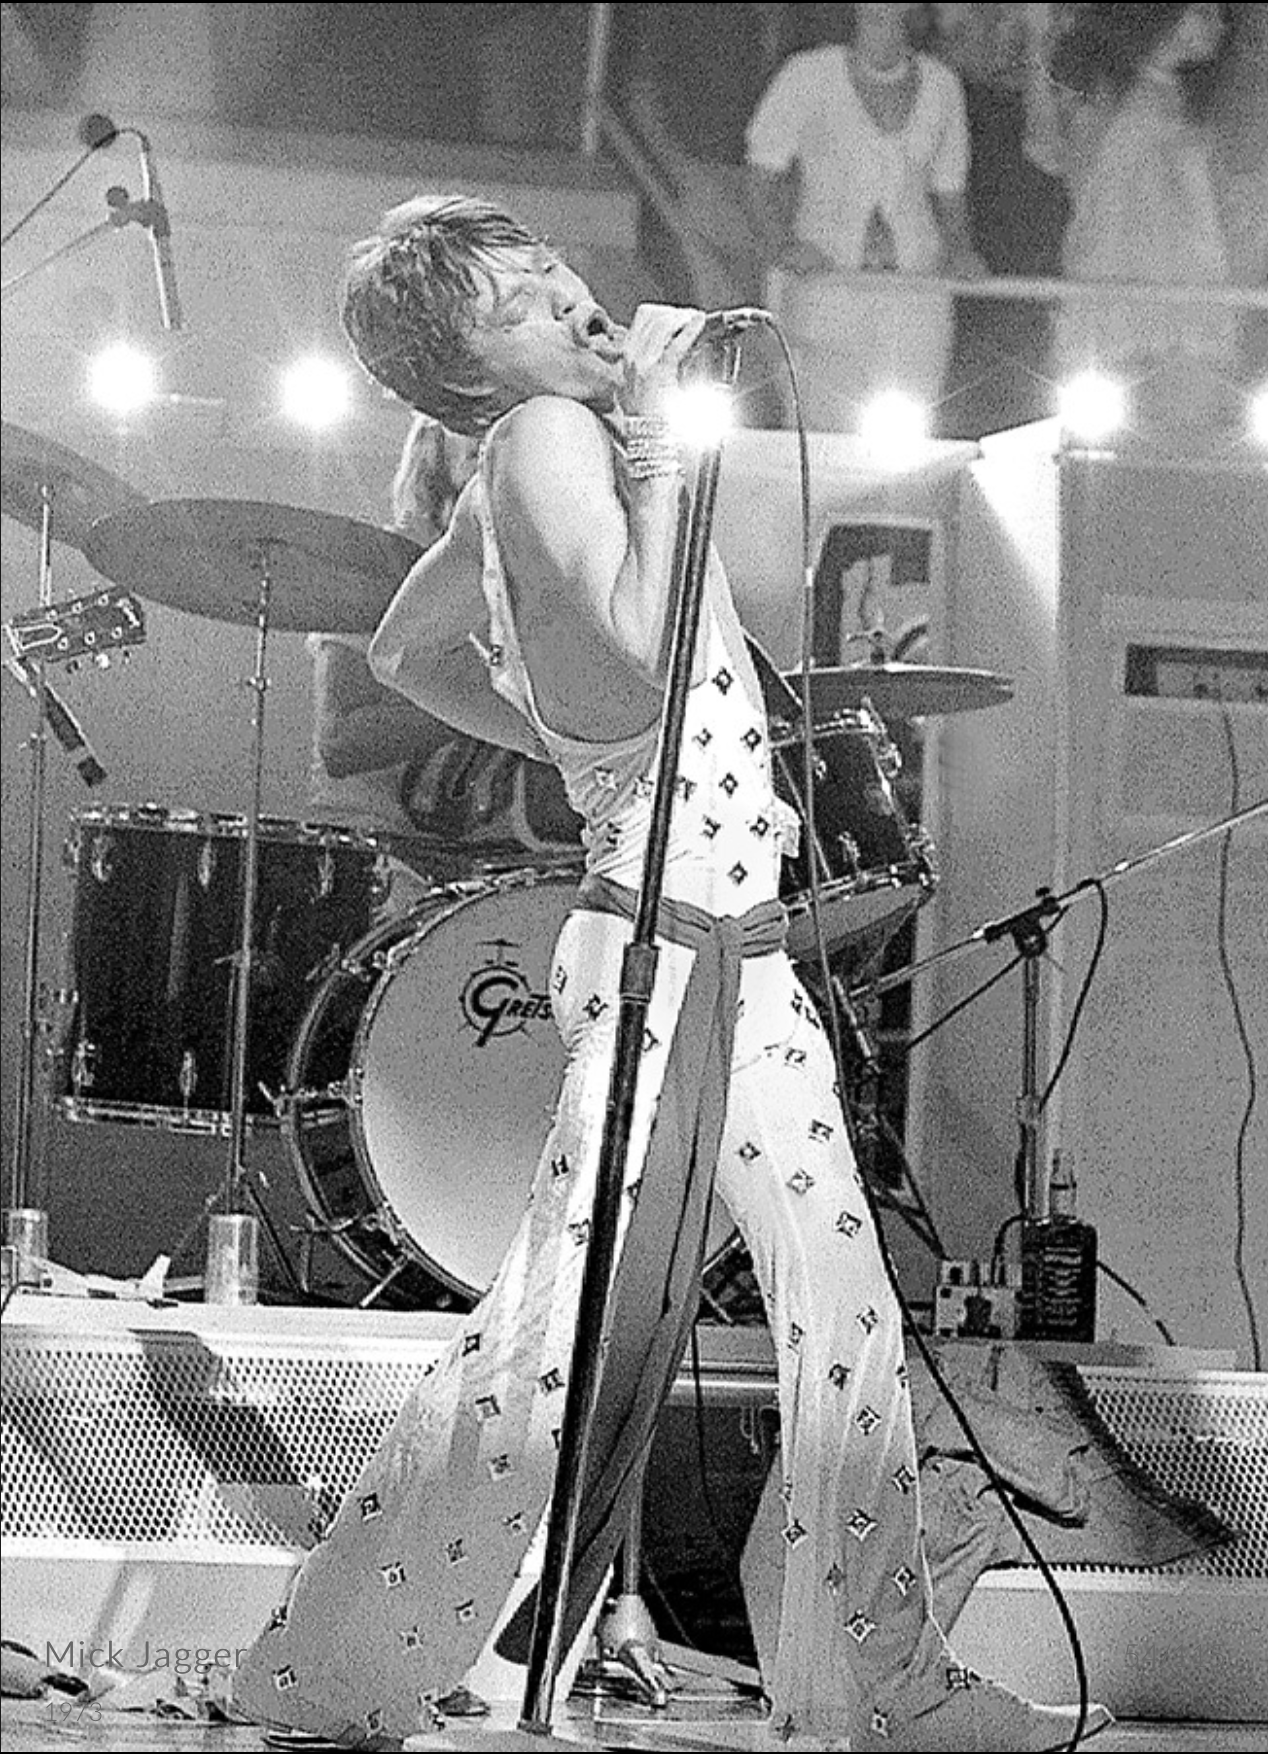 Mick Jagger Wailing 1973 - Richard Upper